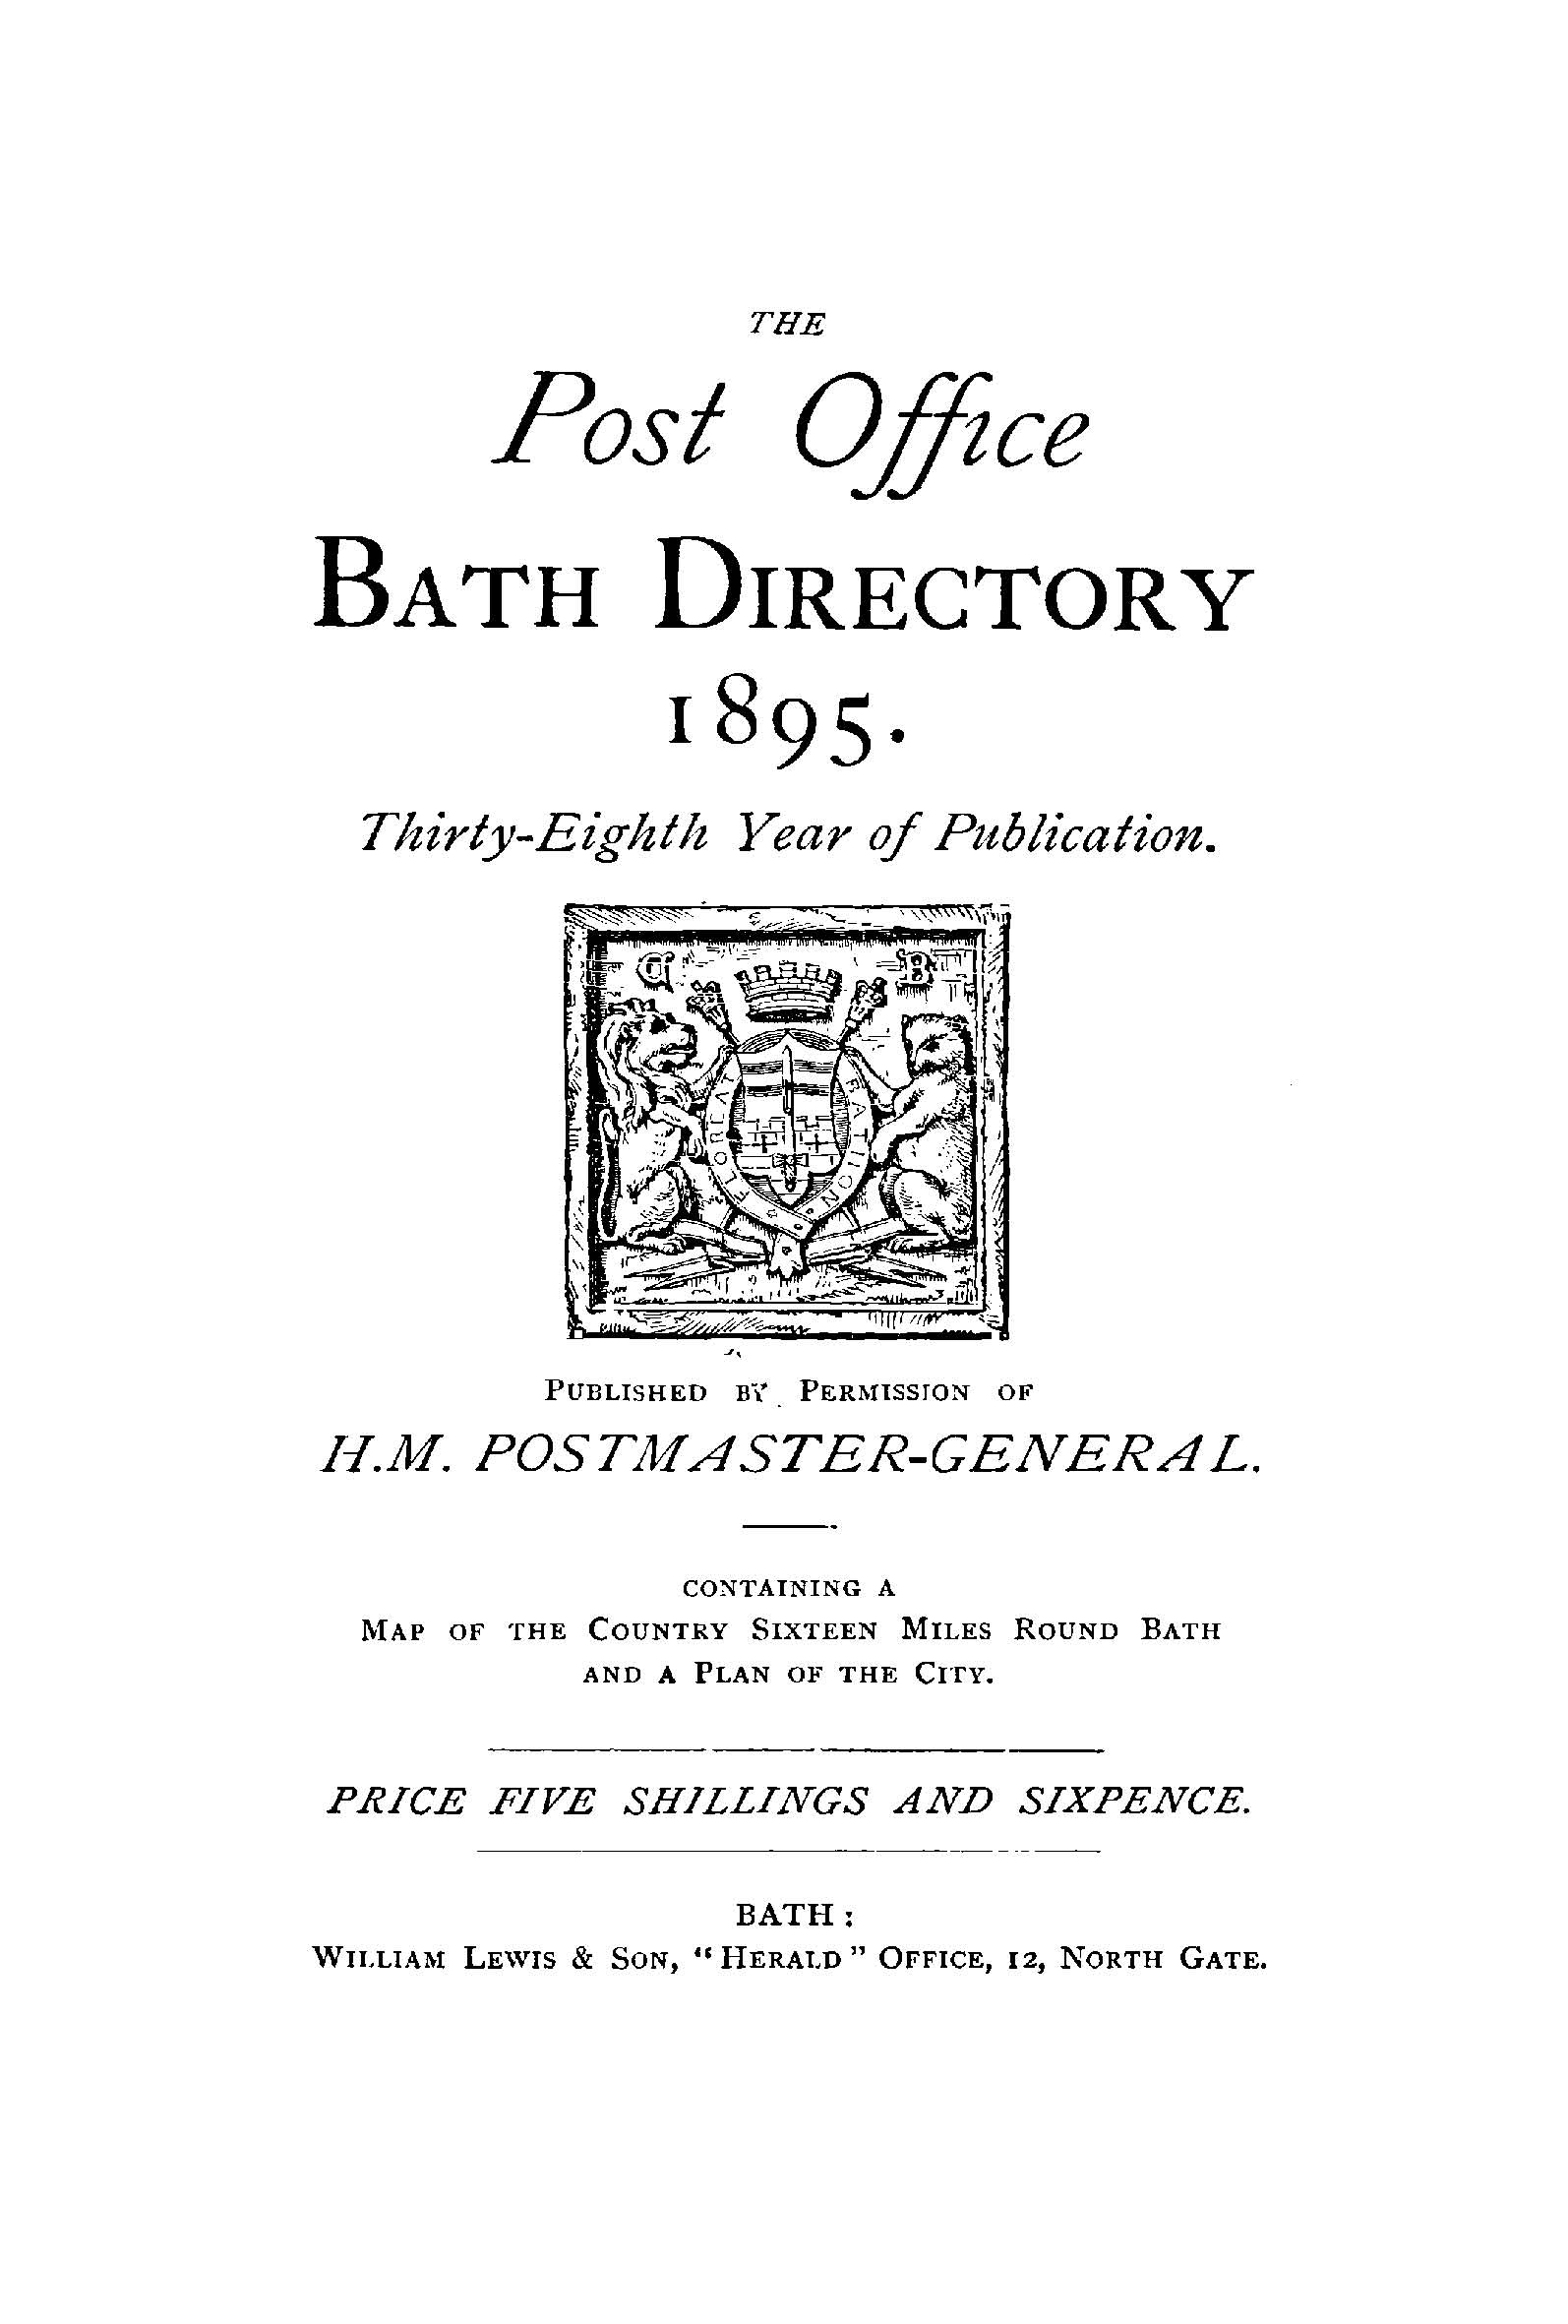 PO Bath Directory 1895